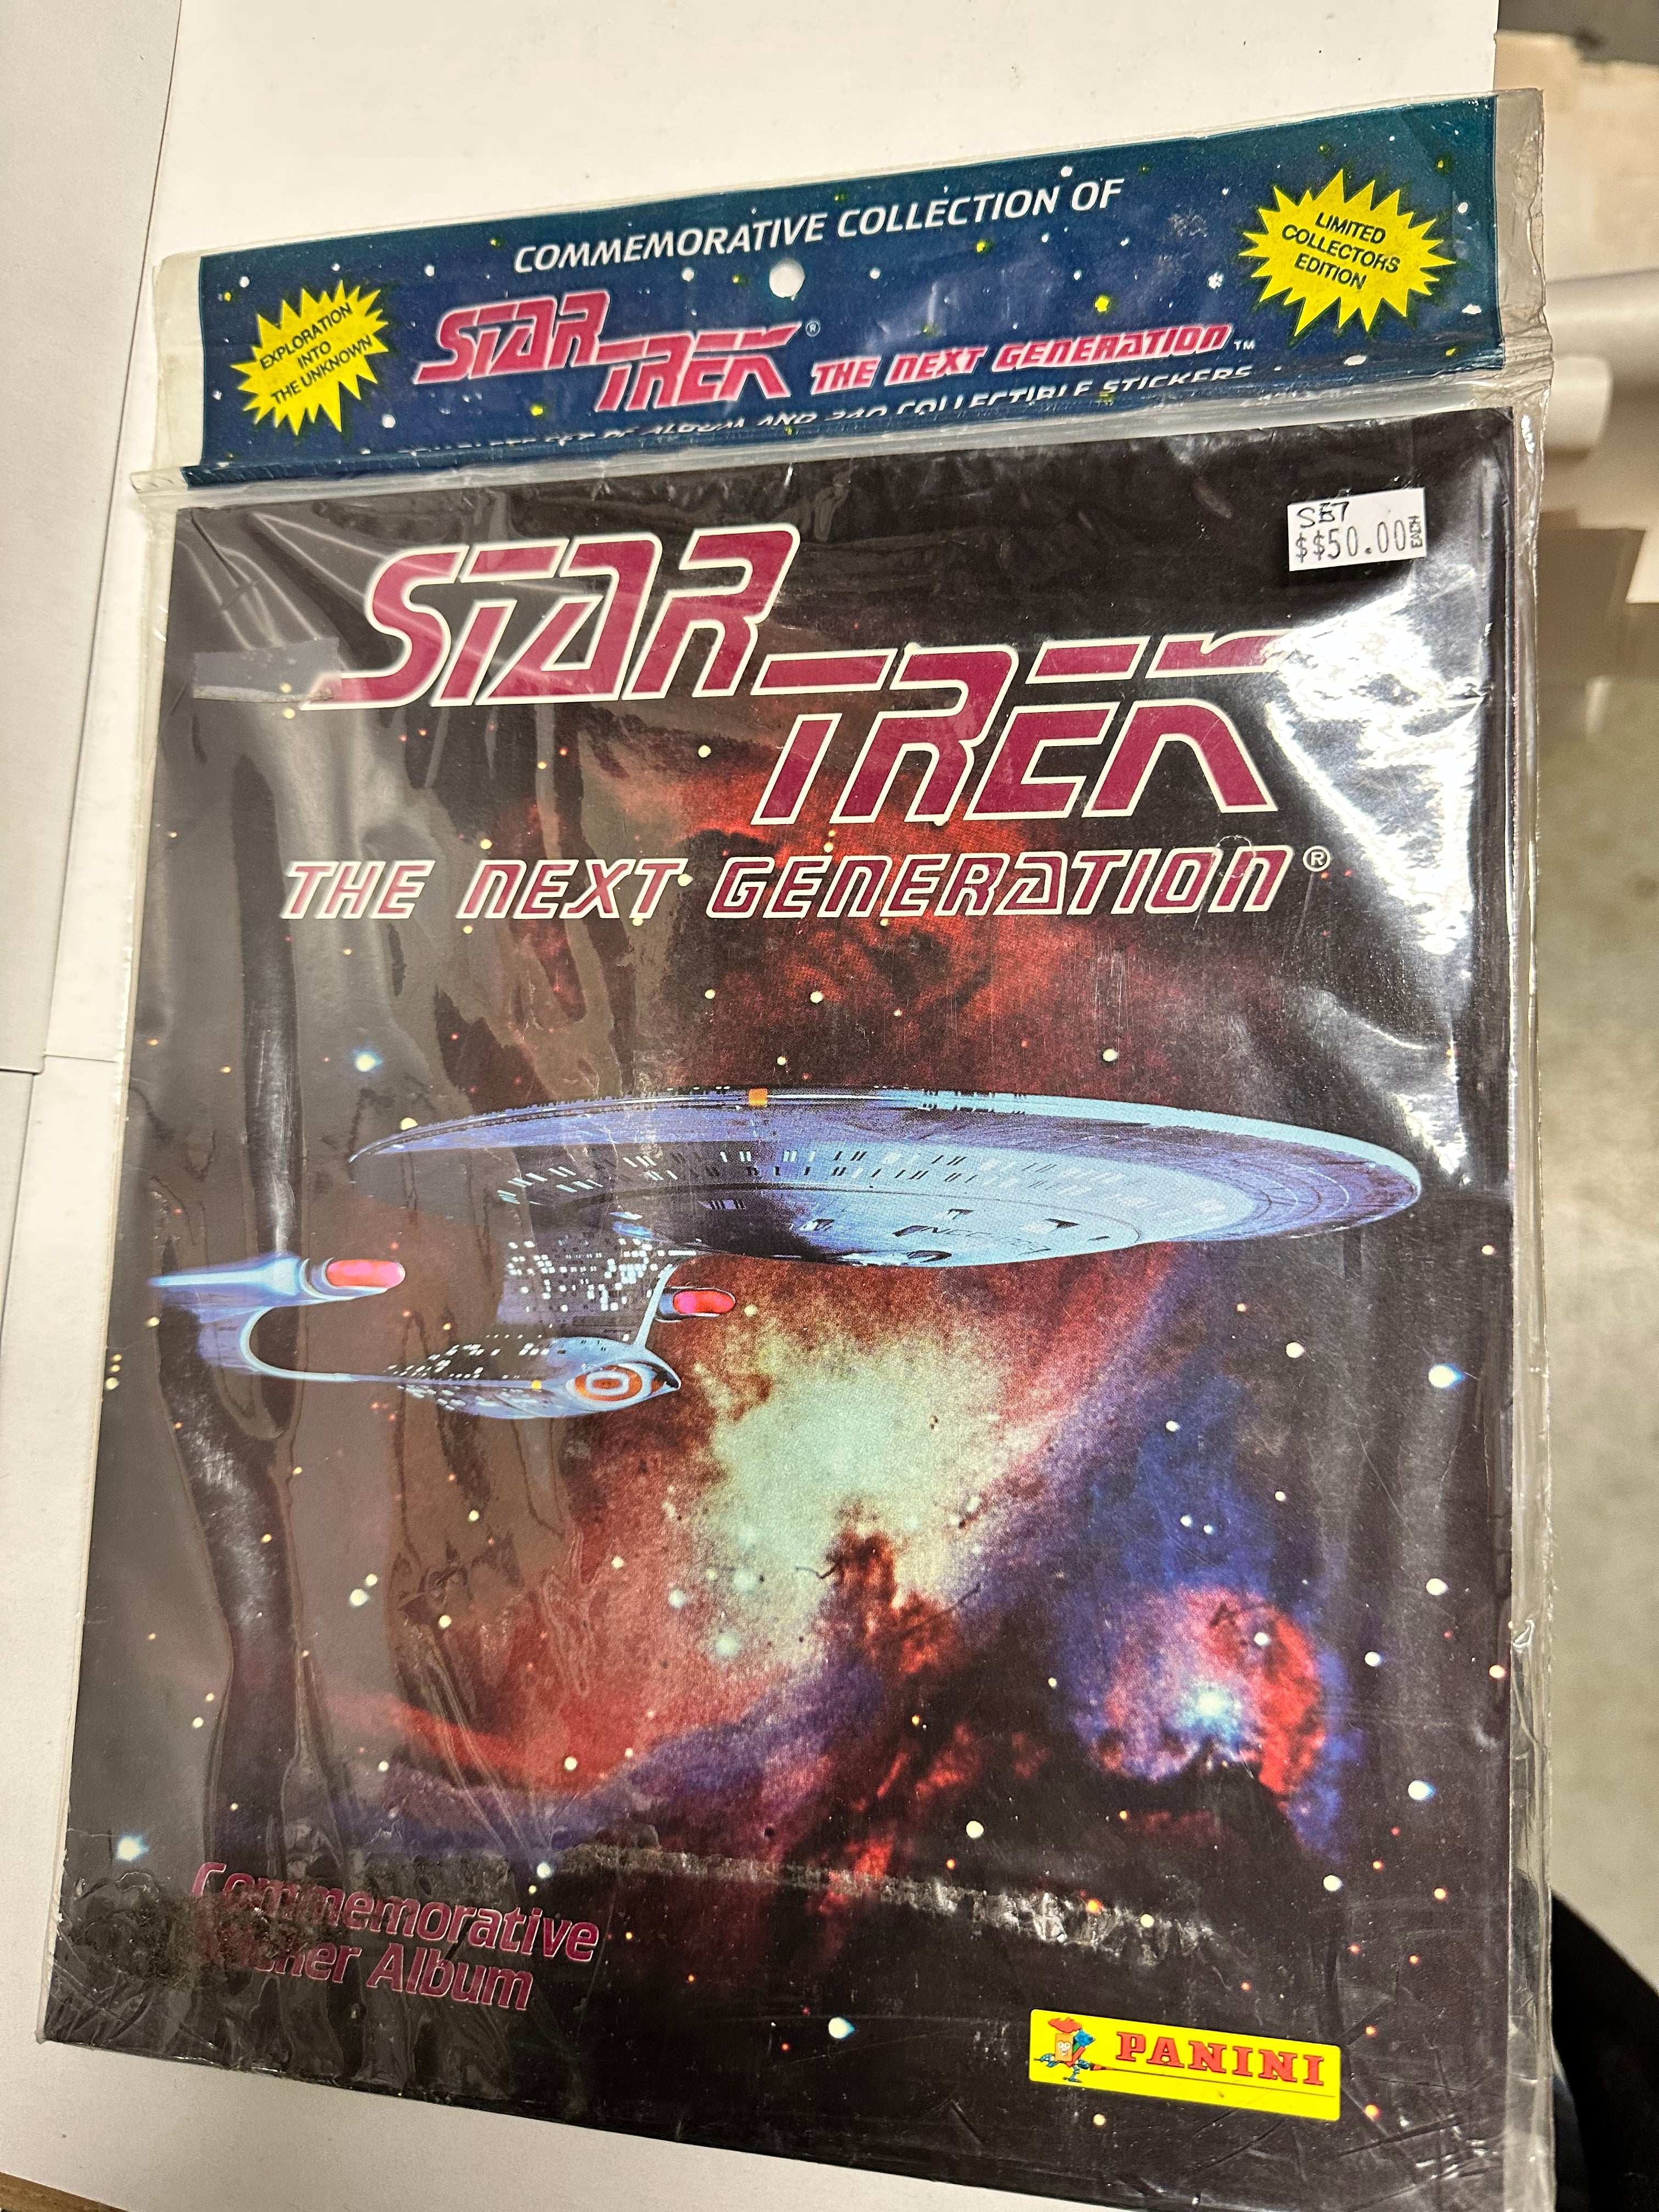 Star Trek Next Generation Panini stickers card set/album 1980s